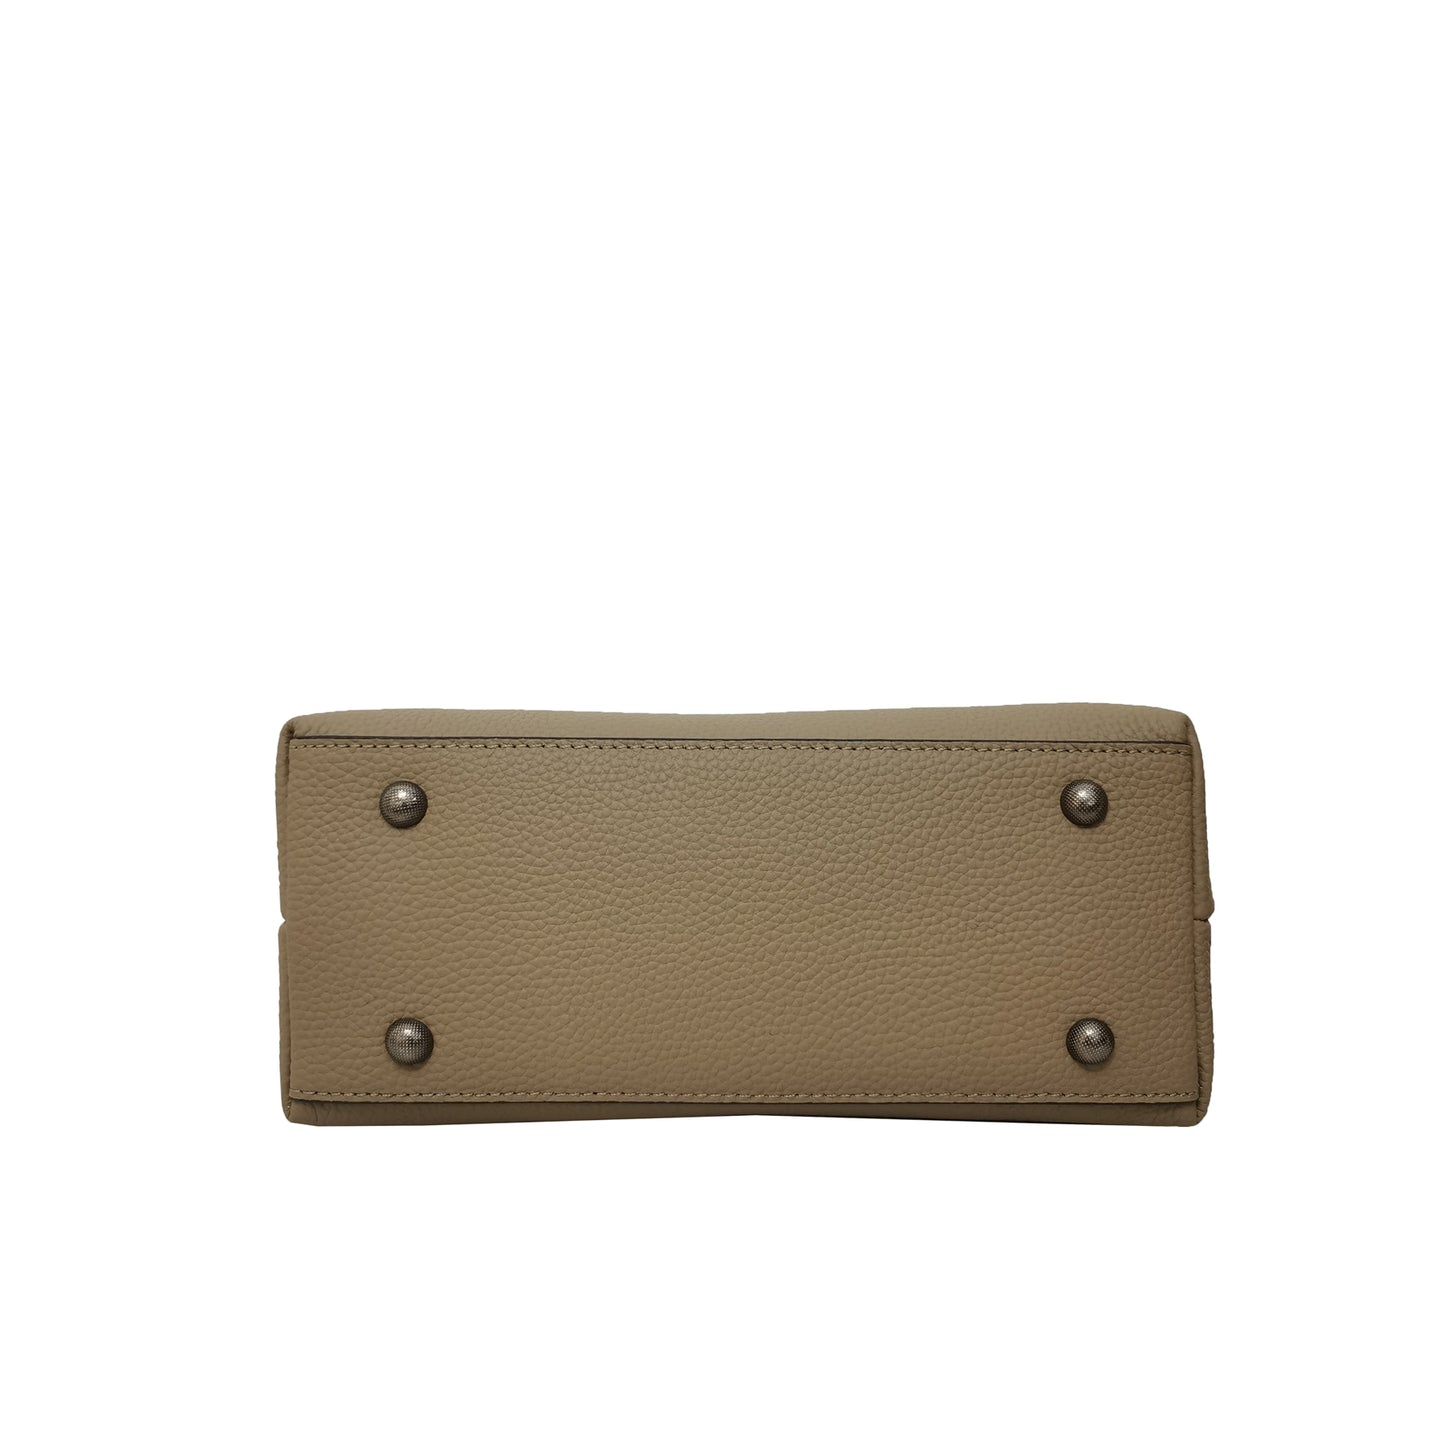 Women's cowhide leather handbag Lari V3 design